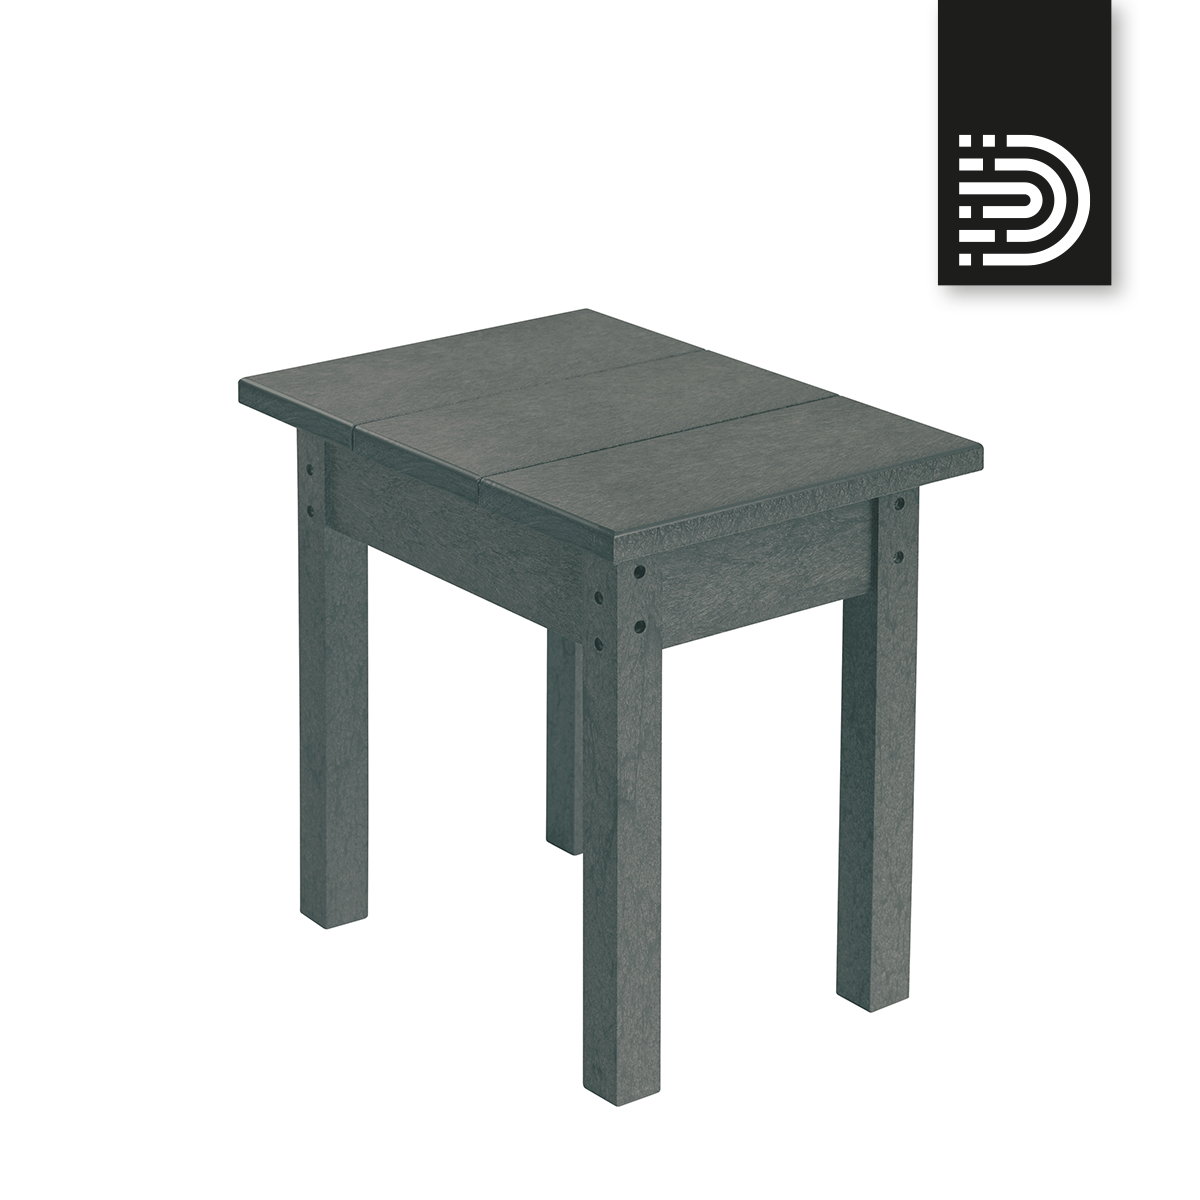 T01 small rectangular table - slate grey 18